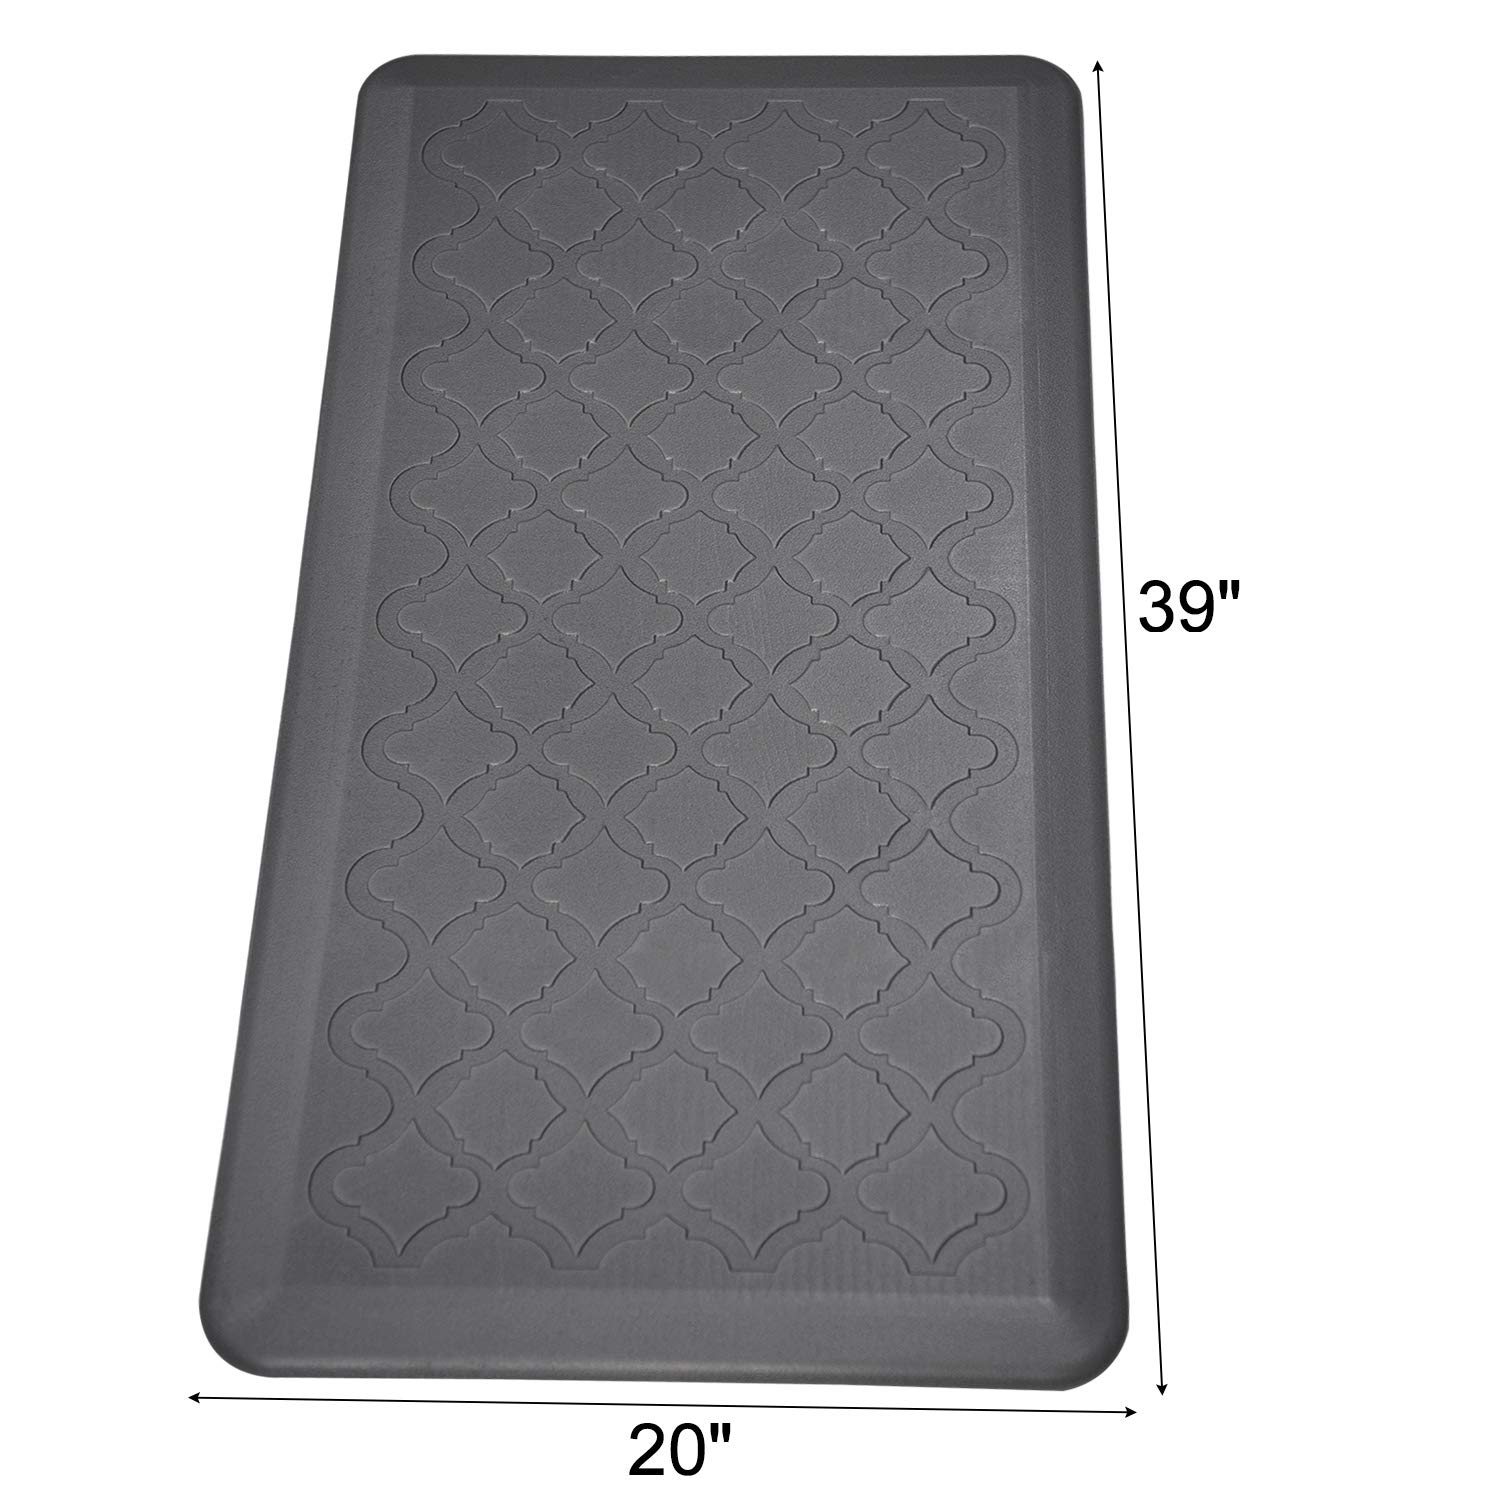 Art3d Y23940 - Anti-Slip Anti-Fatigue Memory Form Kitchen Comfort Mat, 18 x 30